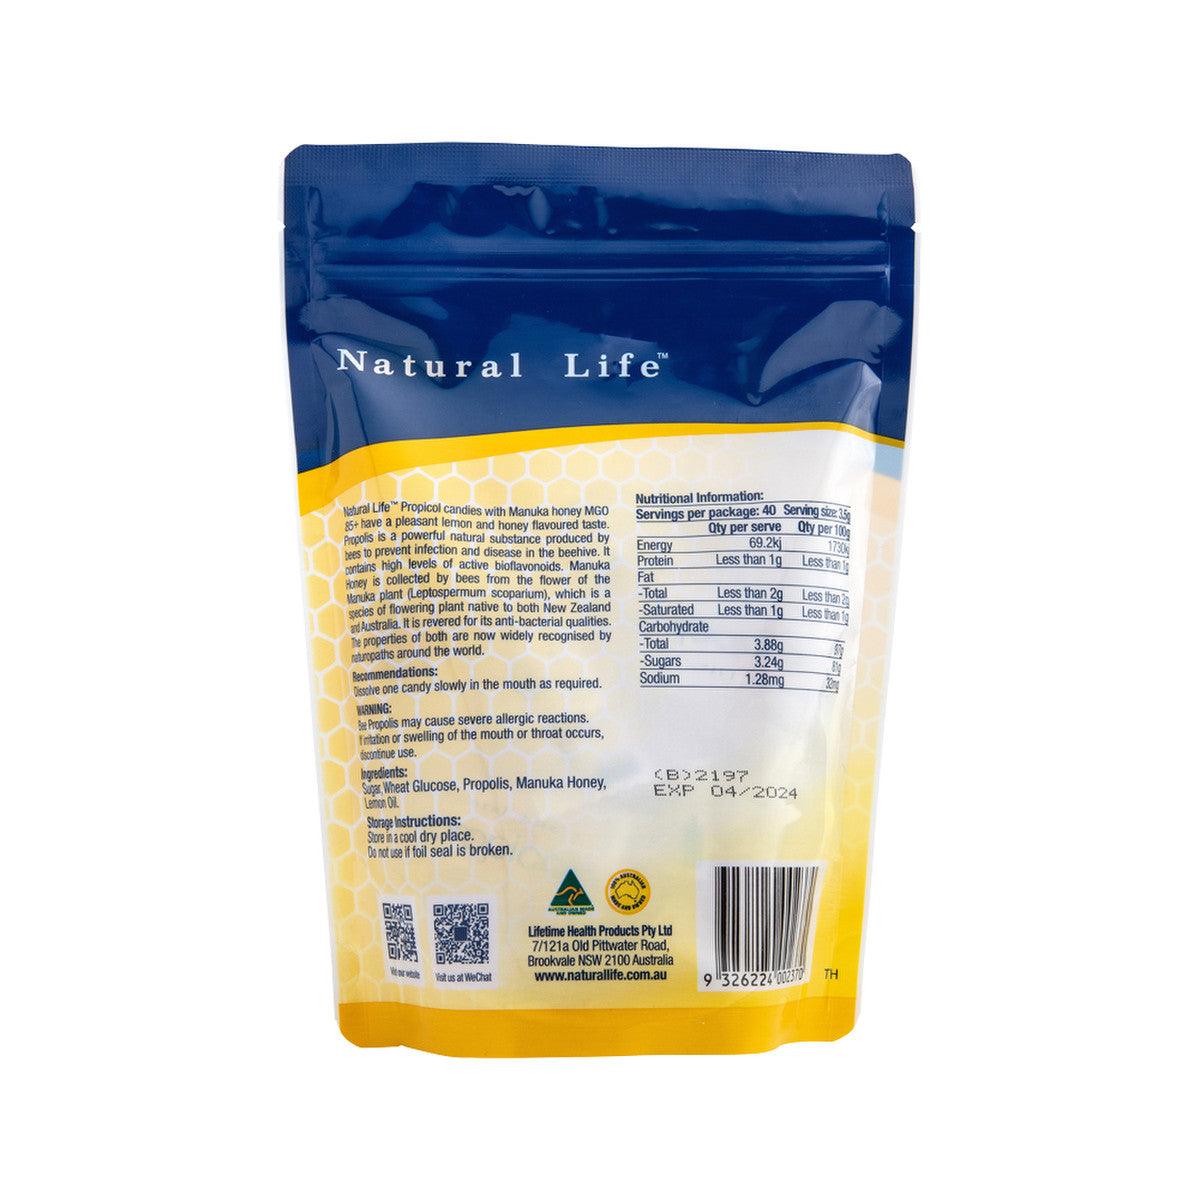 Natural Life Propicol Propolis & Manuka Honey Candy x 40 Pack - QVM Vitamins™